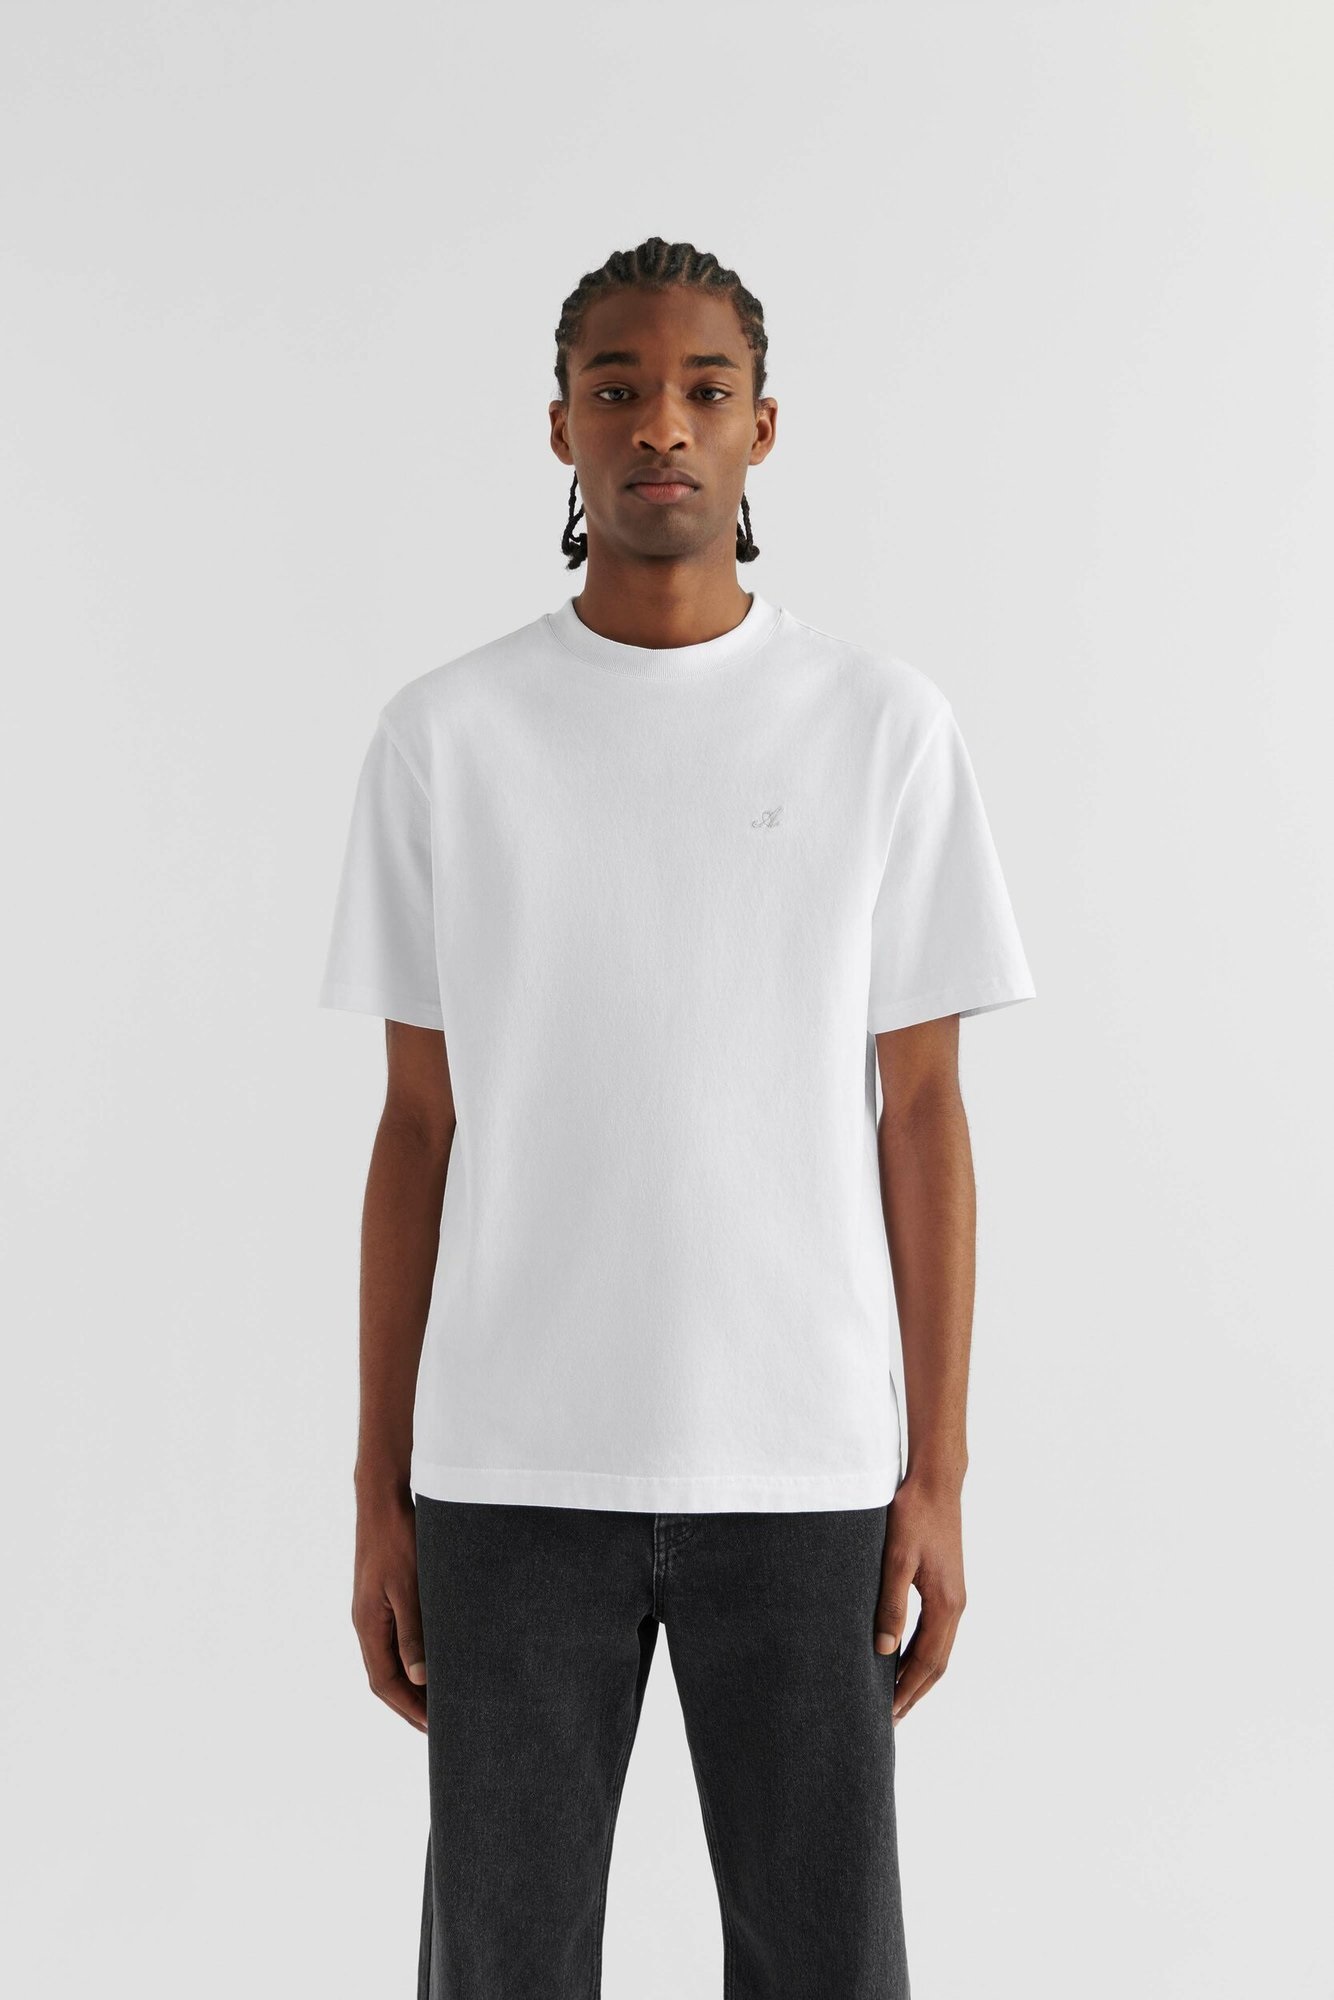 AXEL ARIGATO Signature T-Shirt in White S